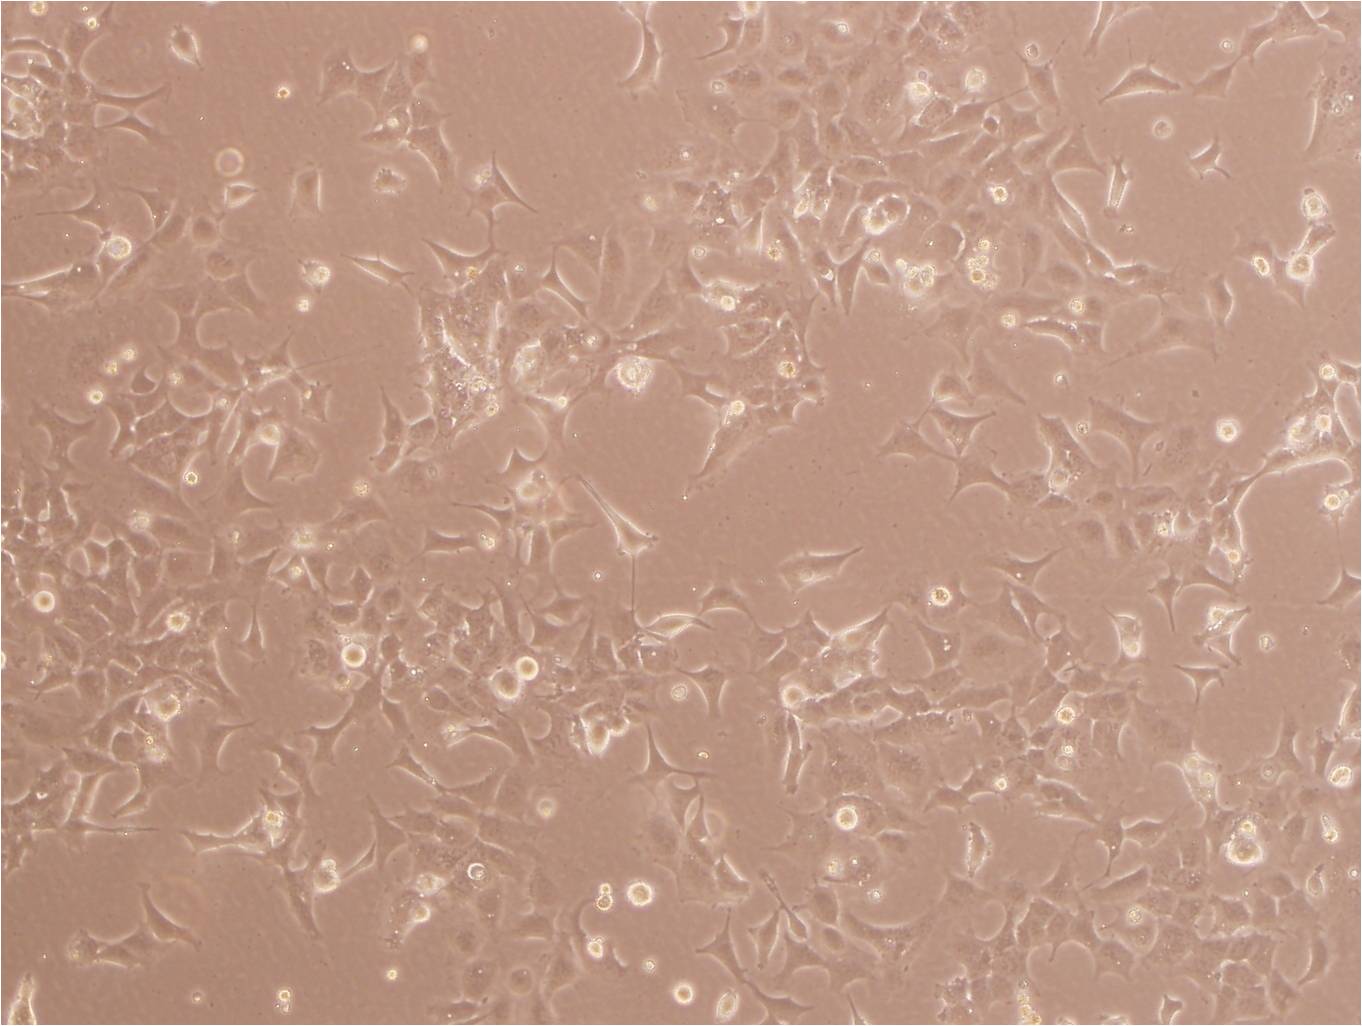 HCT 15 Cells|人结直肠腺癌可传代细胞系